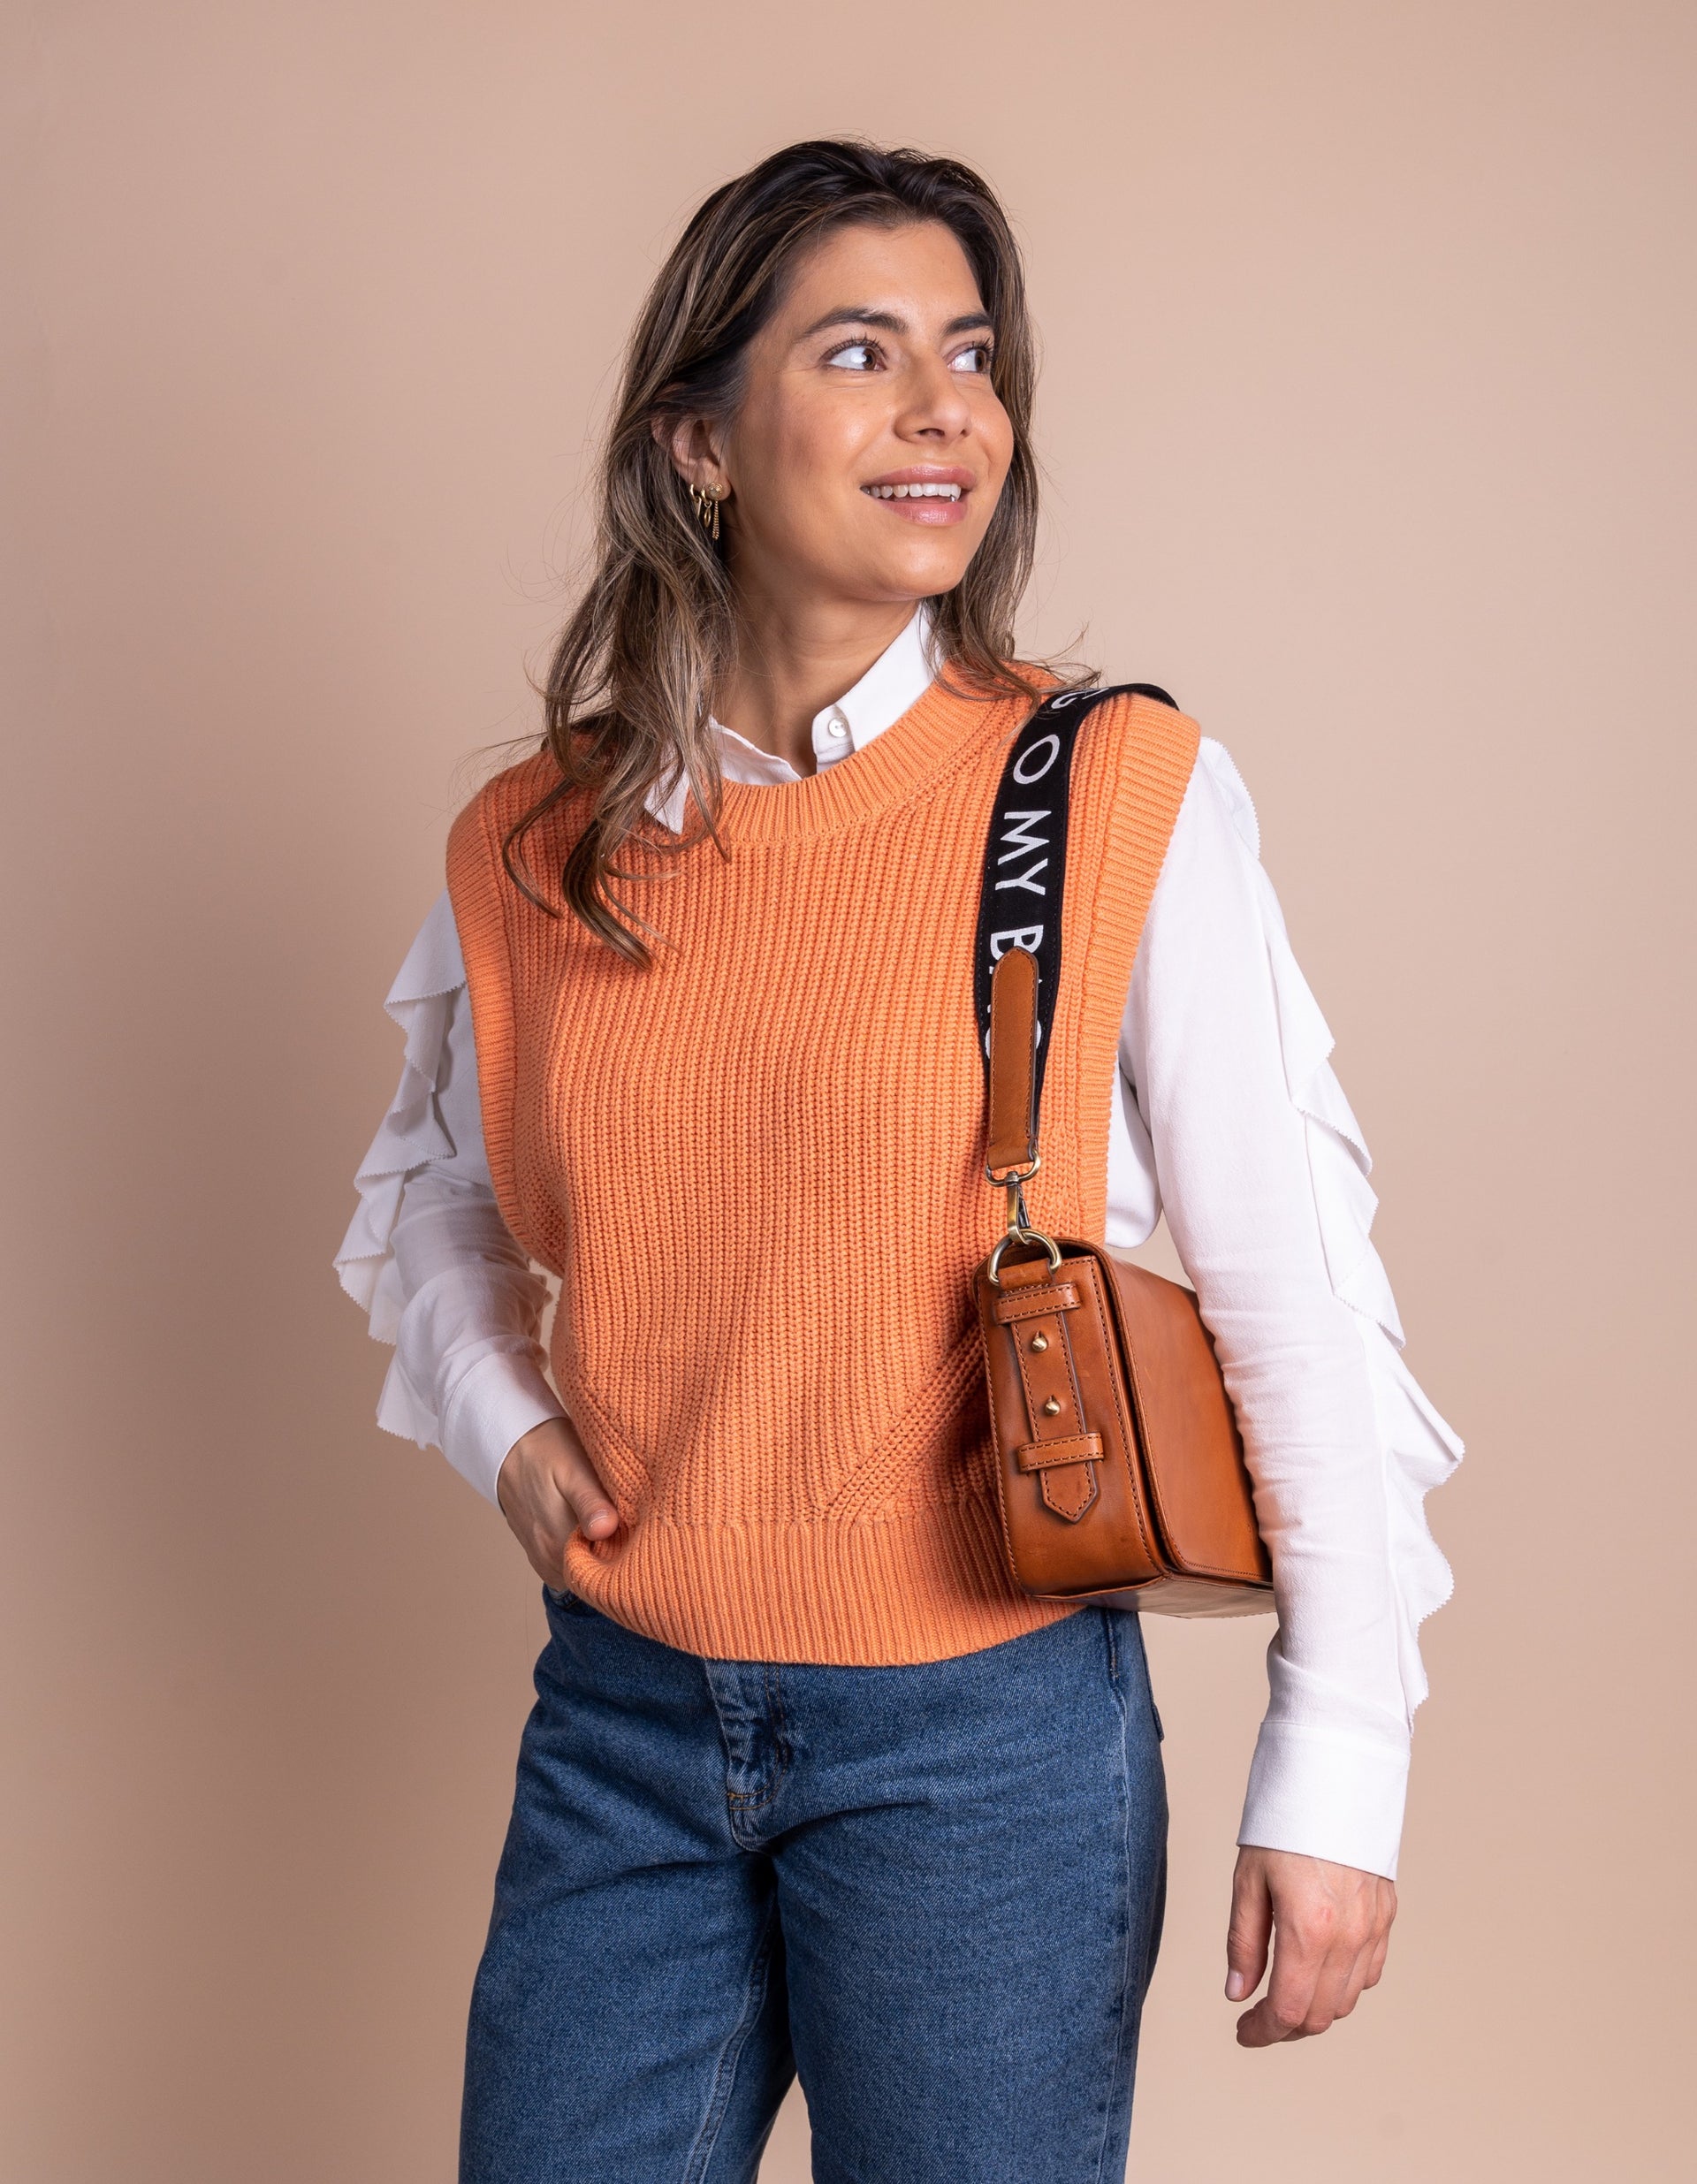 Cognac Longuette Leather womens handbag. Square shape with an adjustable strap. Model image